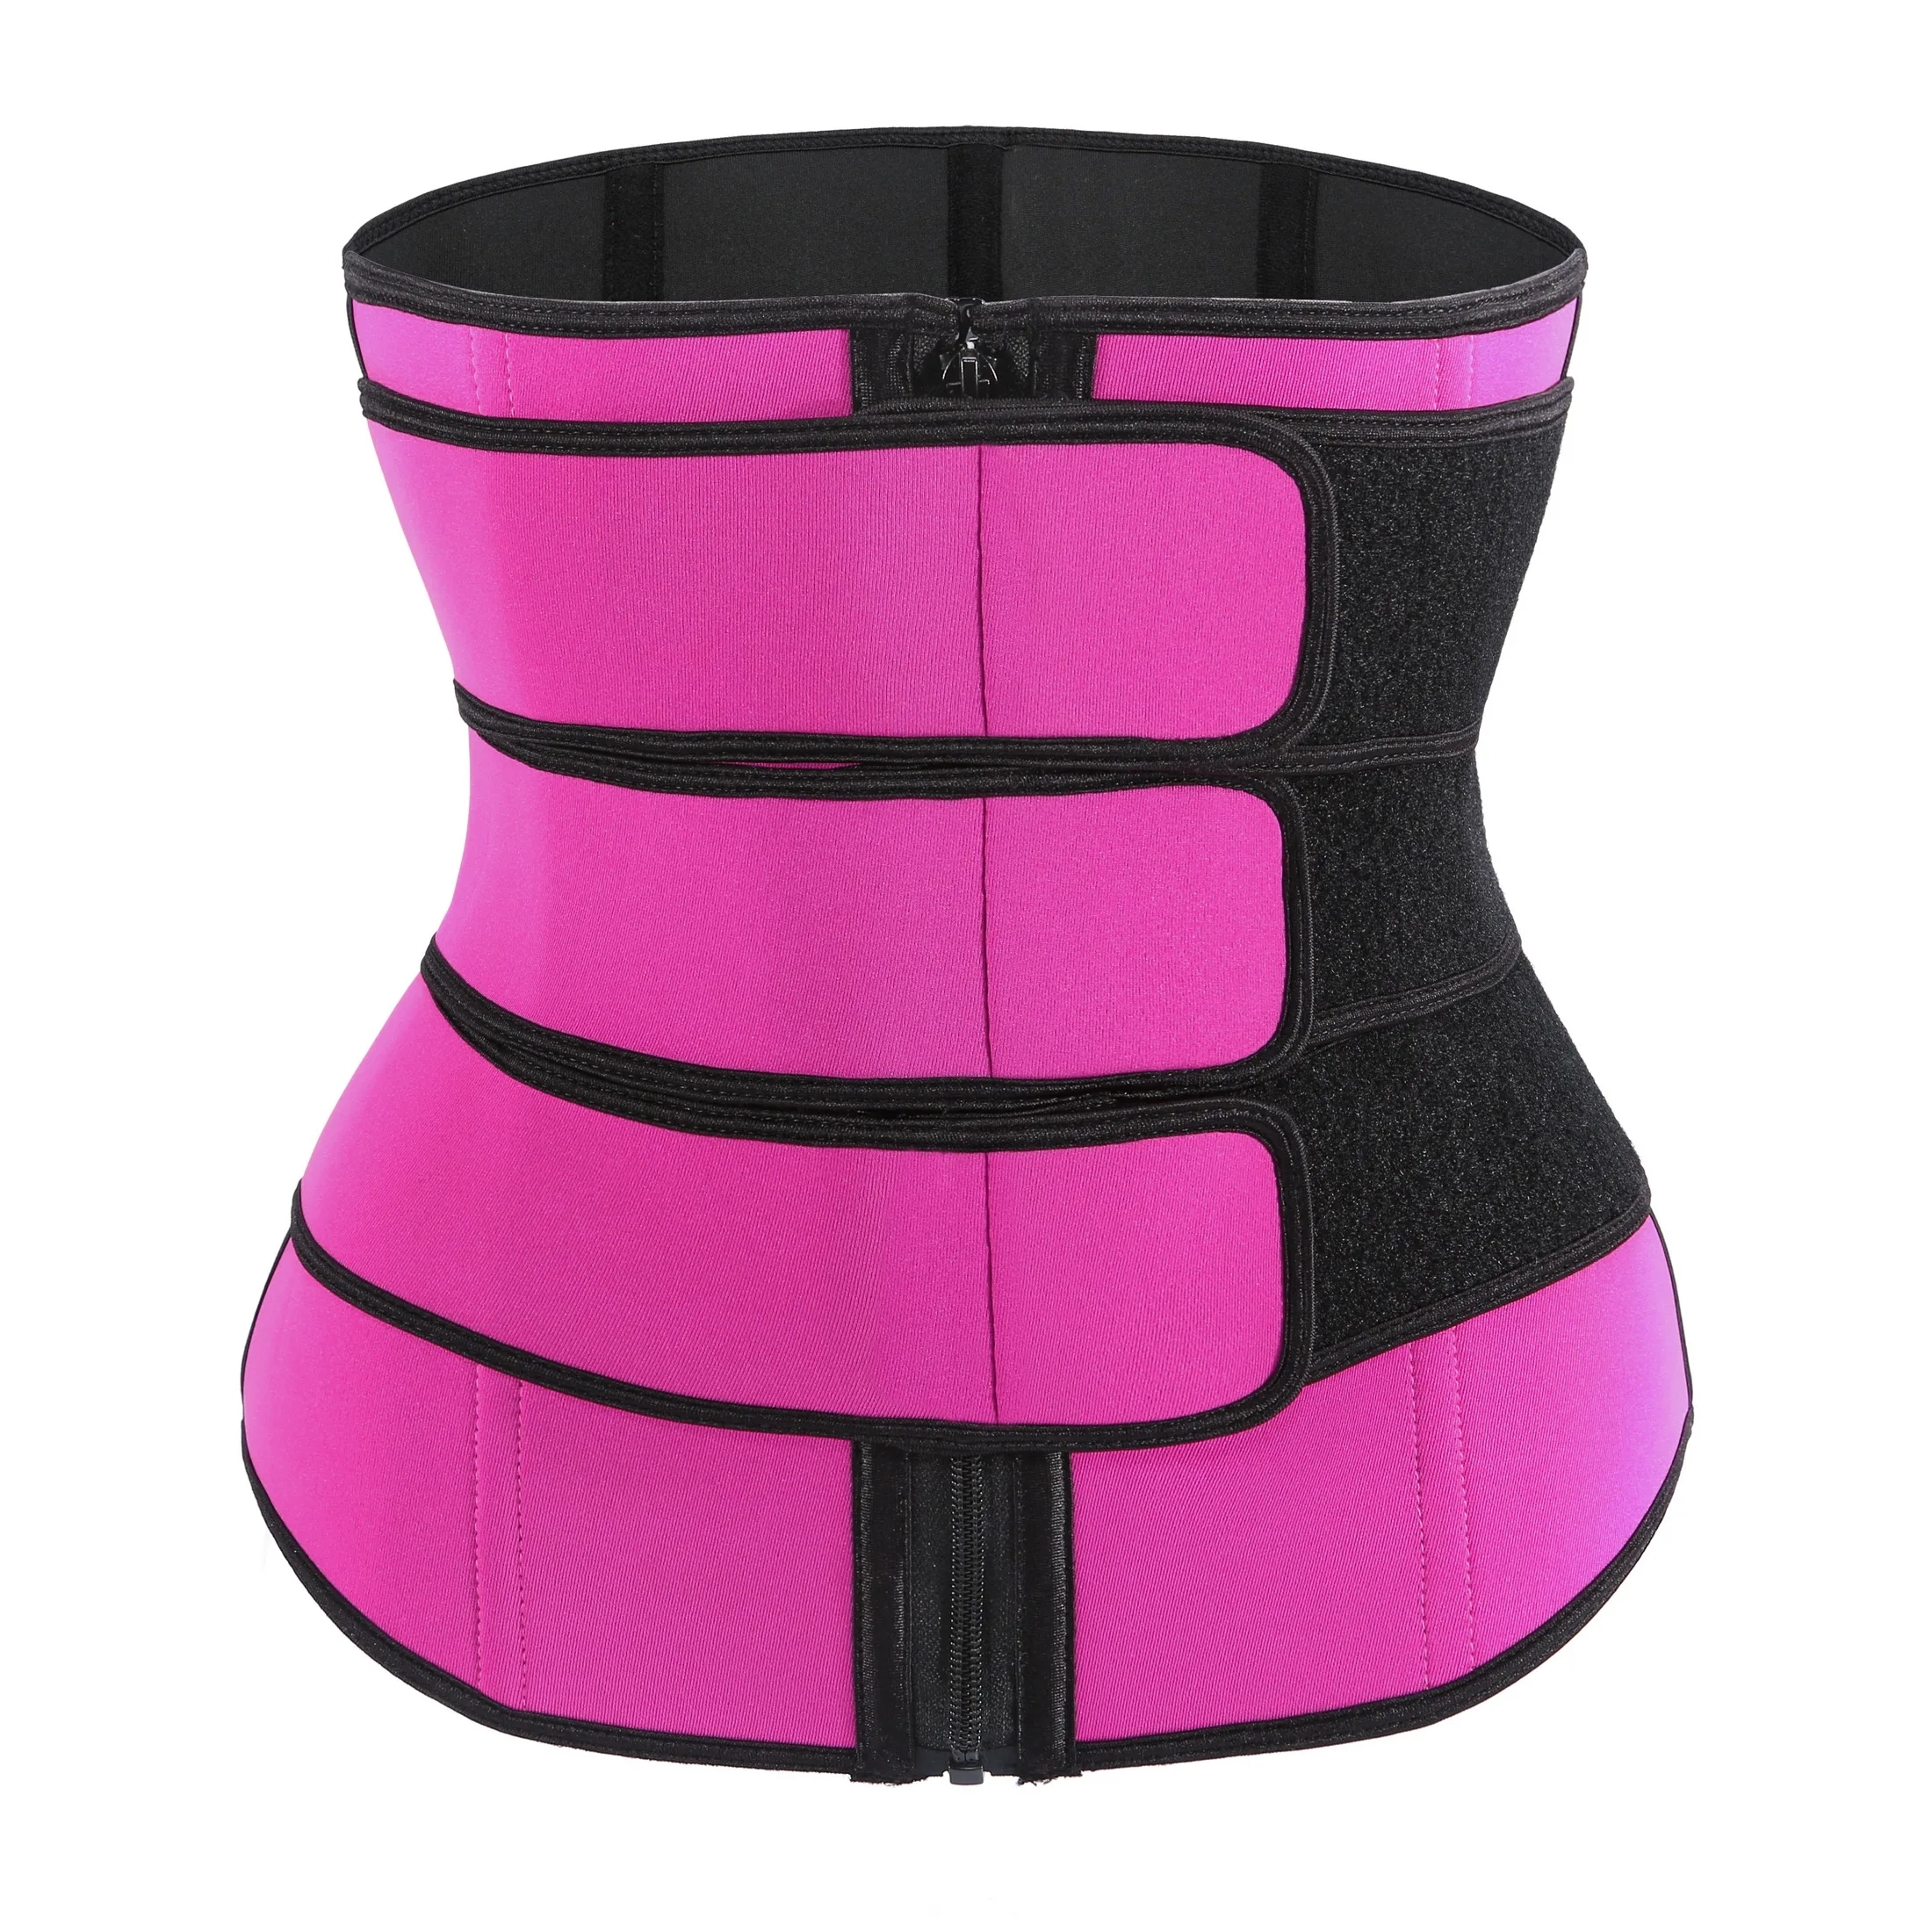 

3 Straps with zipper Women Cincher Body Shaper Slimming Sports Girdle Weight Loss Shapewear Waist Trainer Corset Trimmer Belt, Black,pink,gray